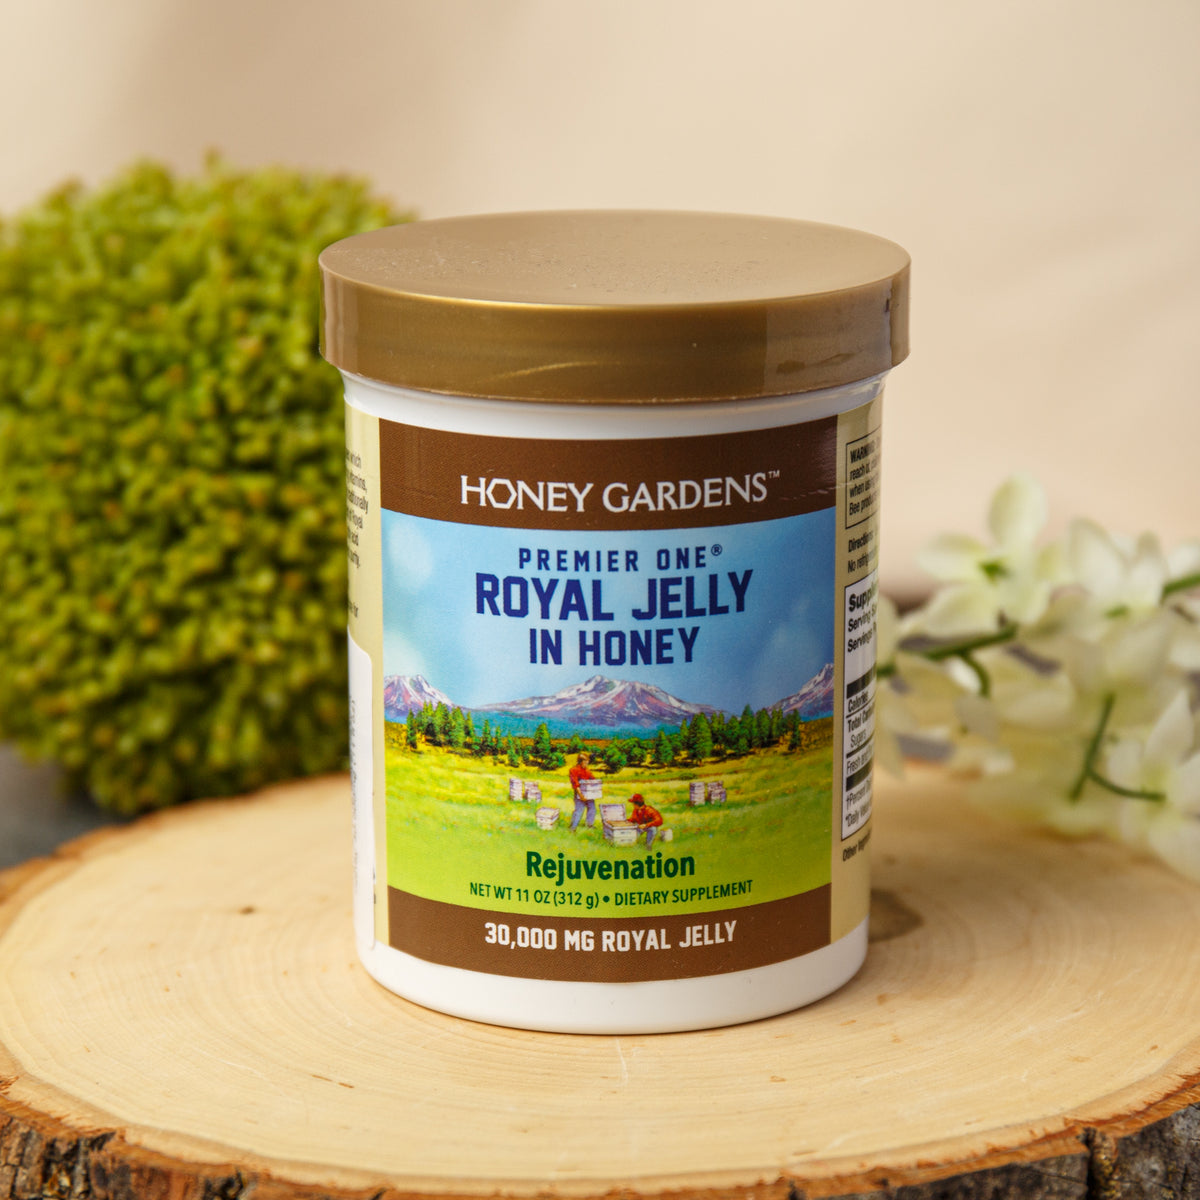 Premier One Royal Jelly in Honey 30,000mg (11 fl oz) #12180